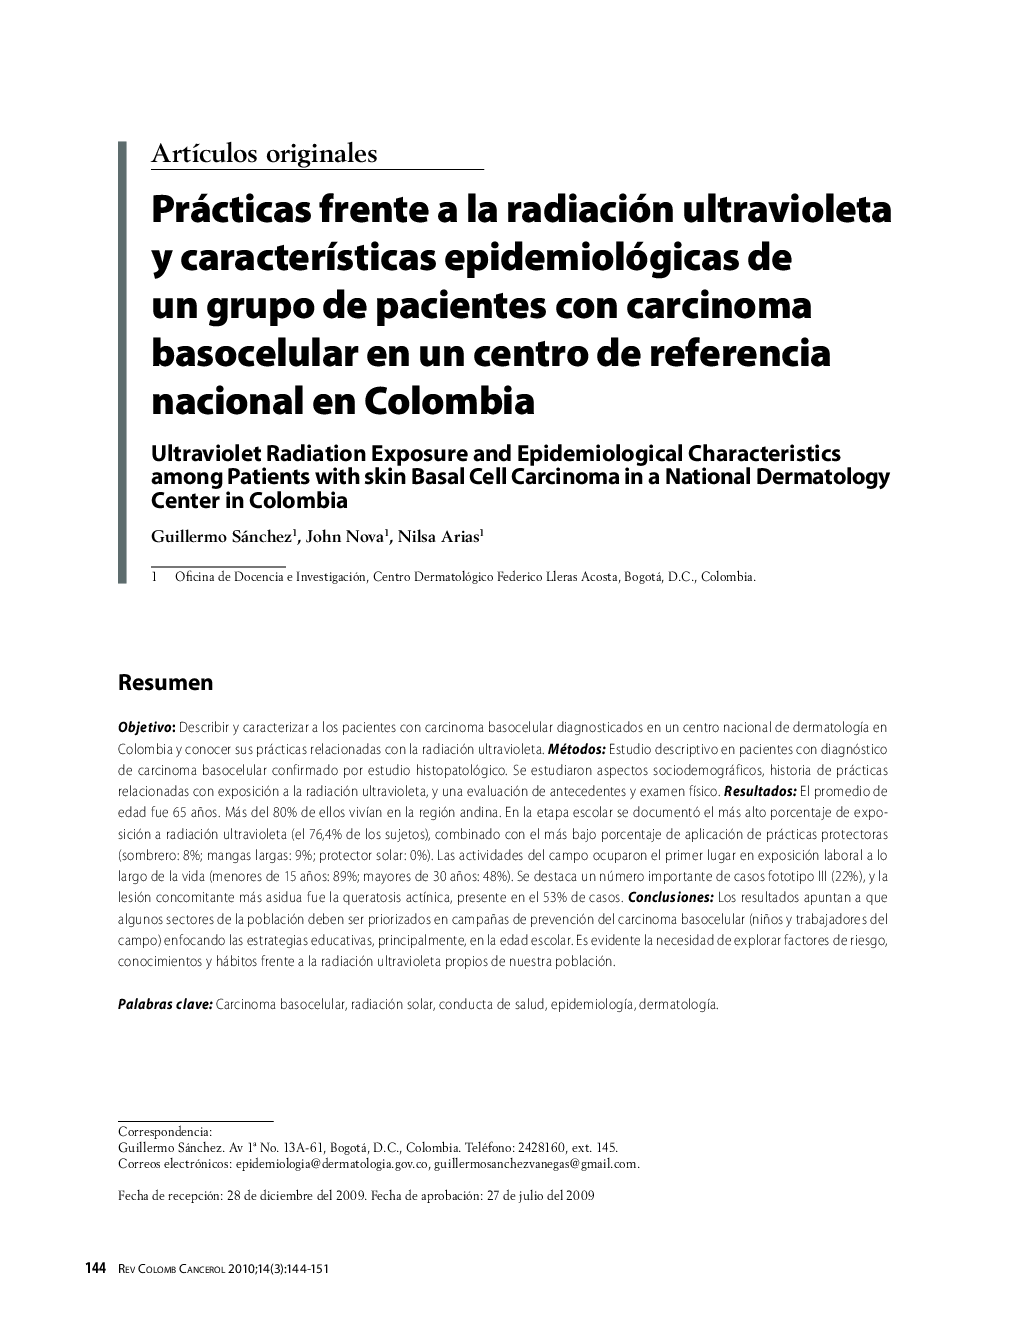 Prácticas frente a la radiación ultravioleta y características epidemiológicas de un grupo de pacientes con carcinoma basocelular en un centro de referencia nacional en Colombia